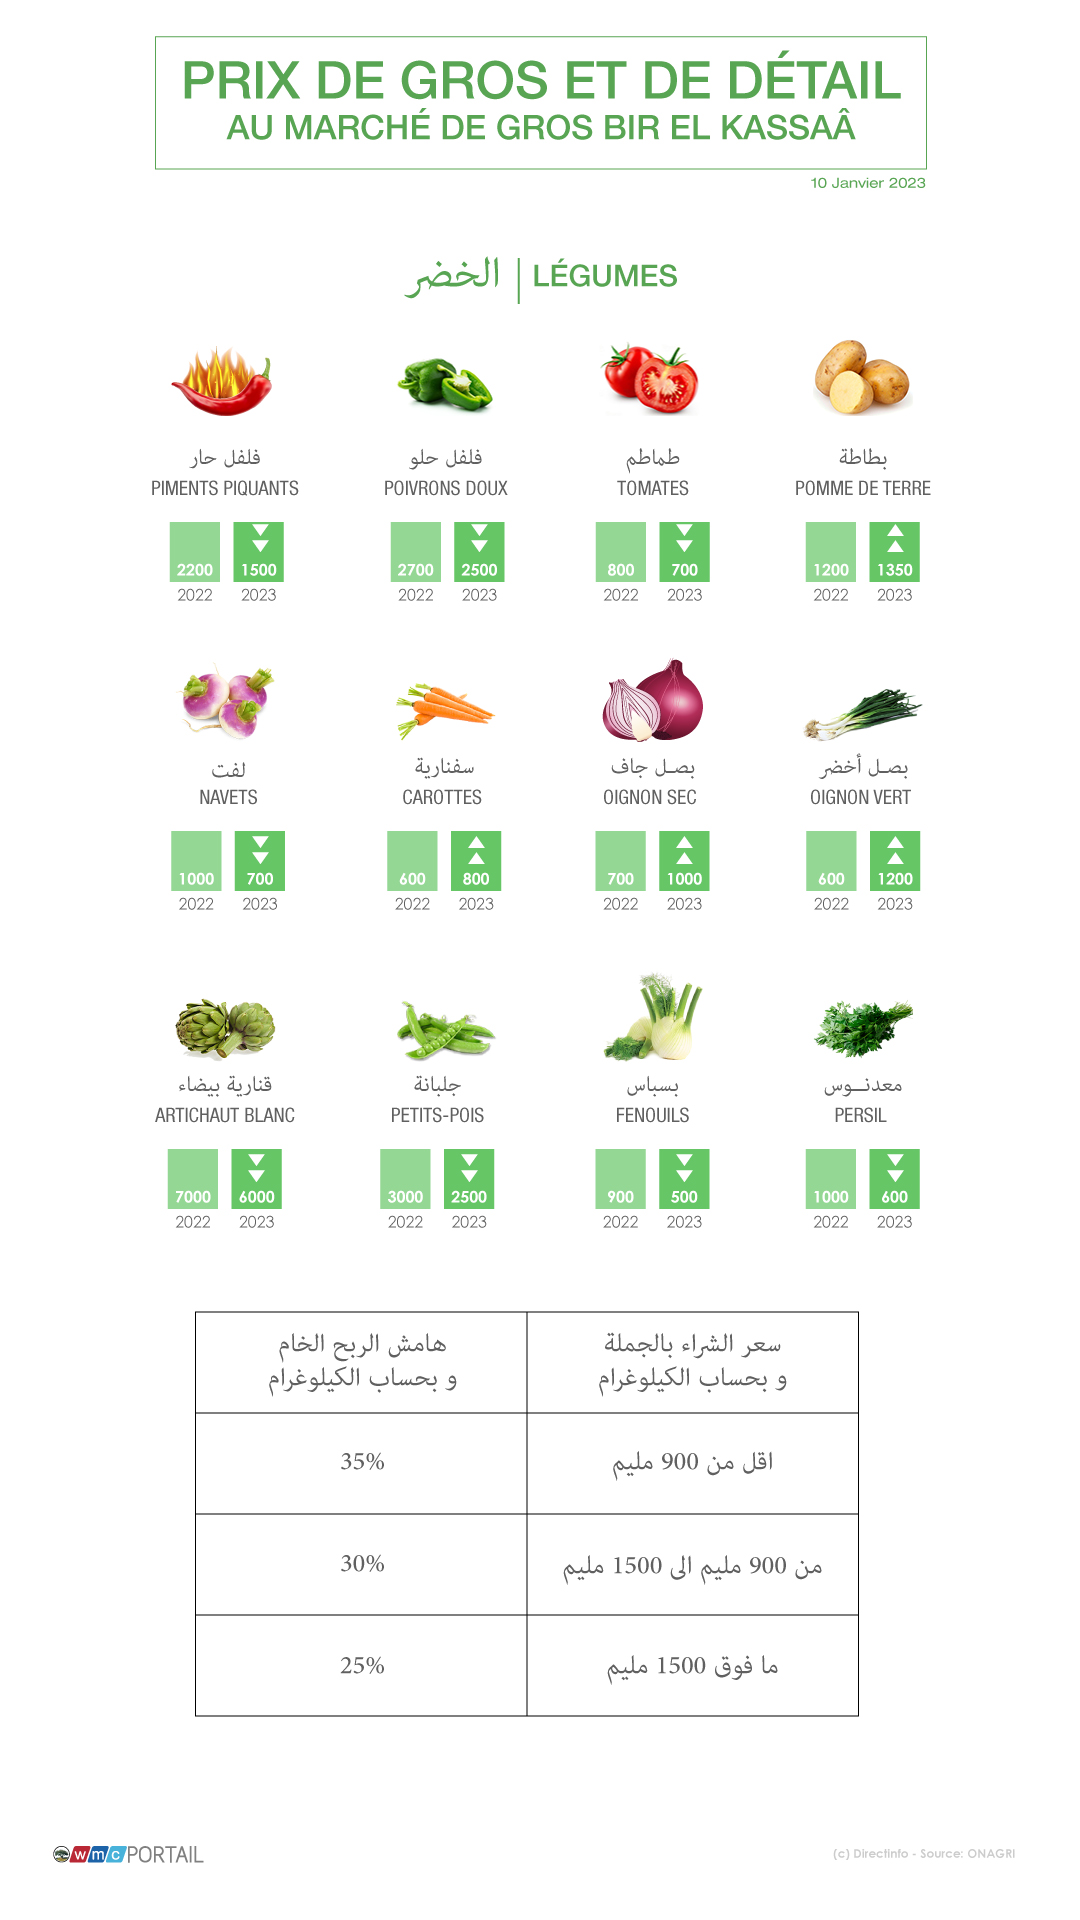 Bir el kassaa legumes - أسعار الخضر والغلال ،اللحوم والأسماك بسوق الجملة ببئر القصعة..